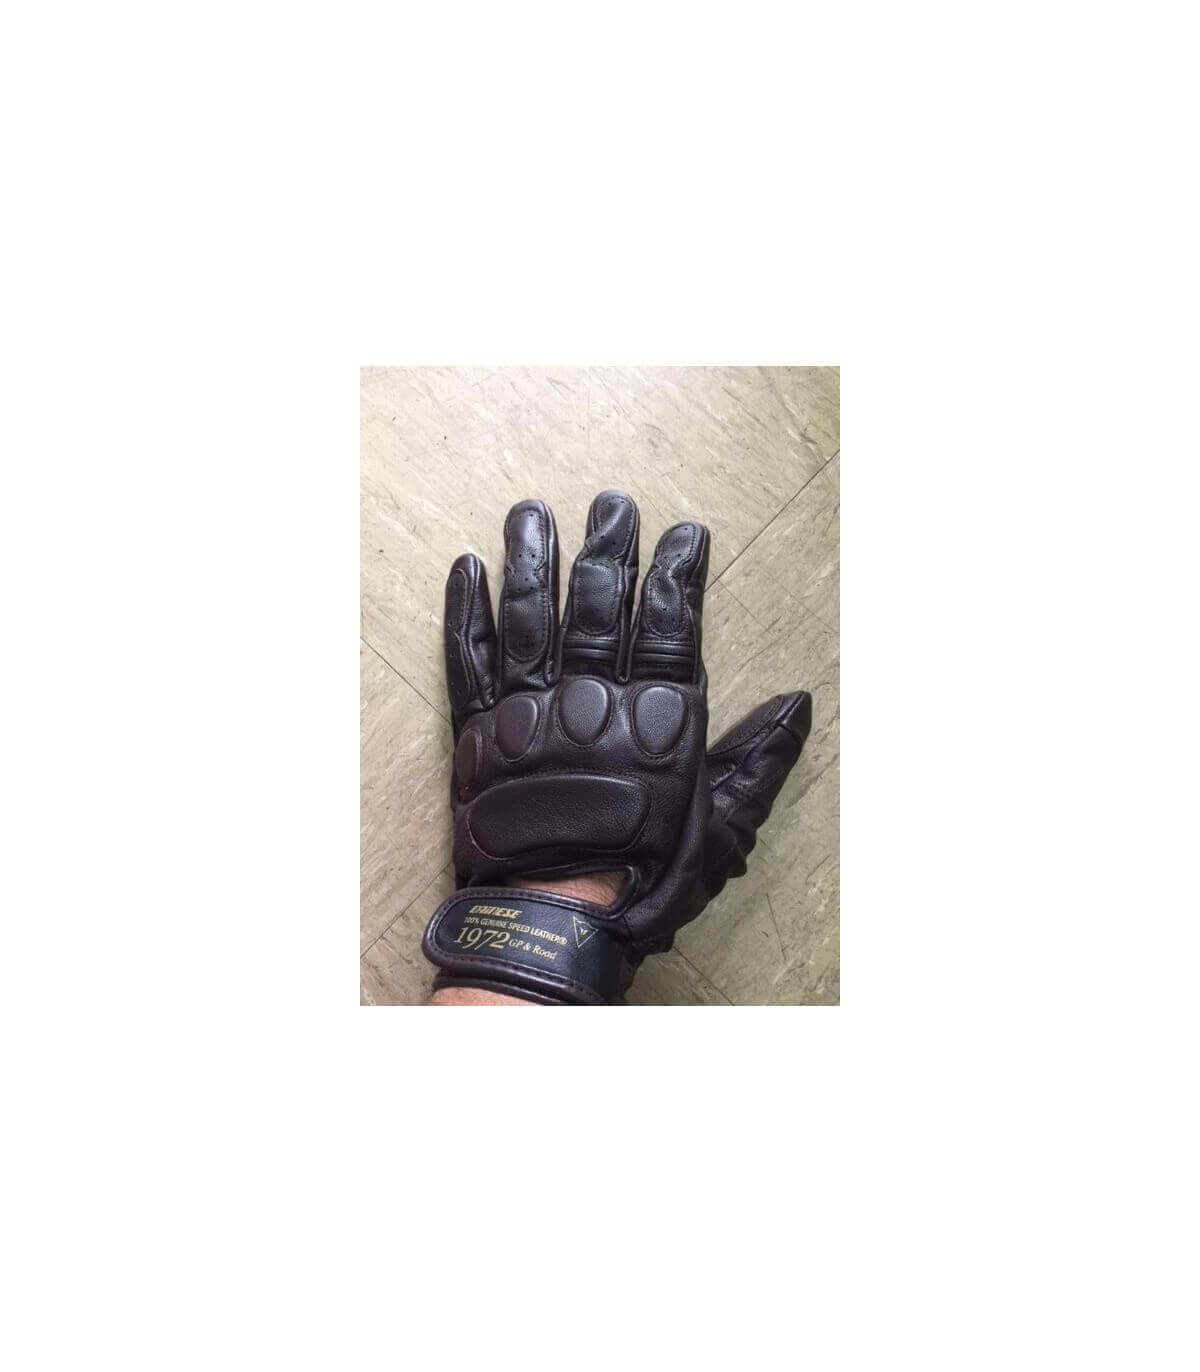 Dainese gloves sale